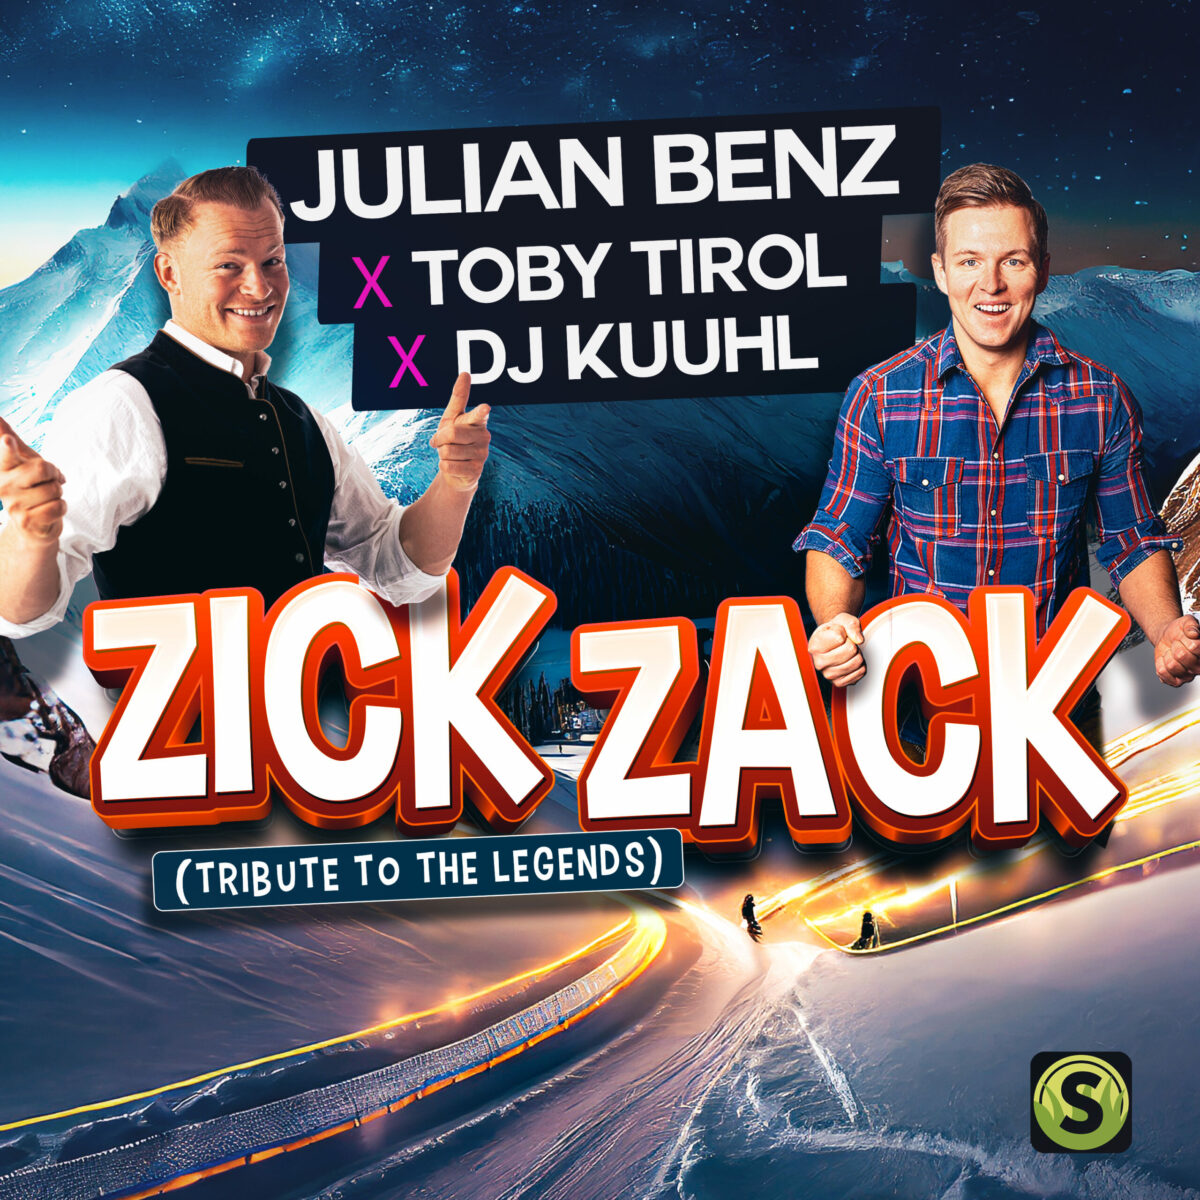 Julian Benz x Toby Tyrol x DJ Kuuhl – Zick Zack (Tribute to the Legends)